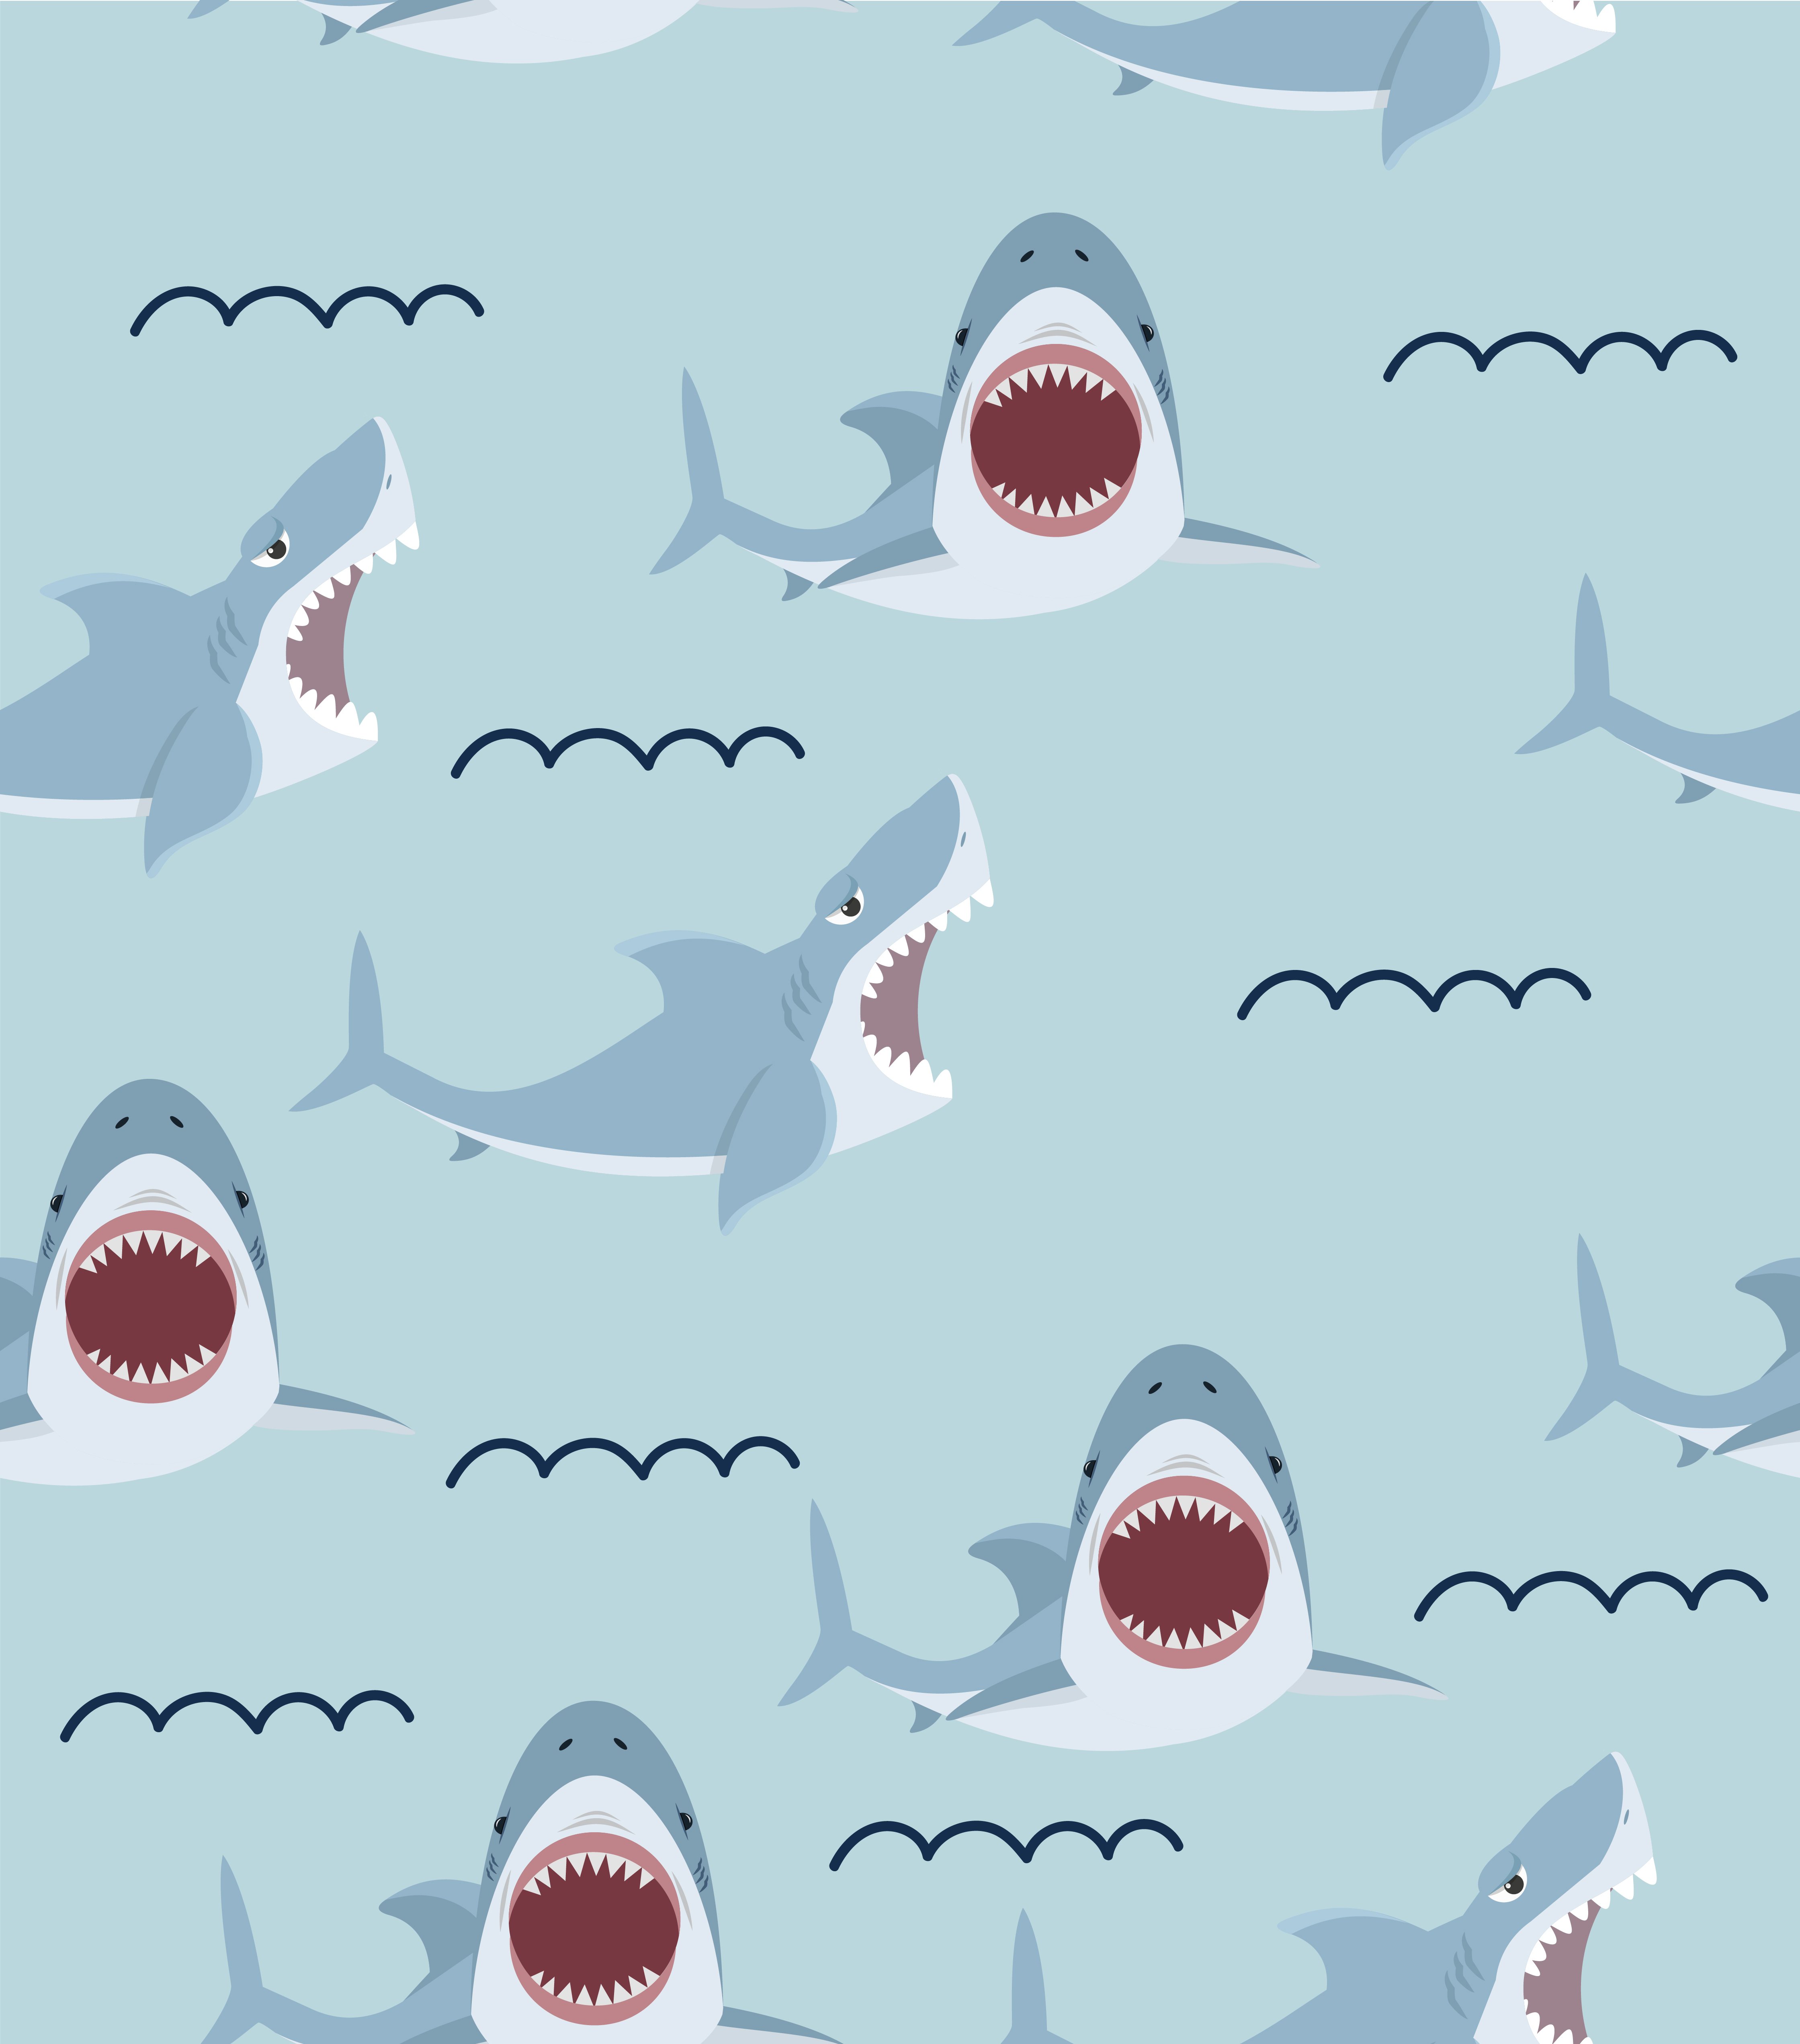 Cute Shark Wallpaper Images  Free Download on Freepik